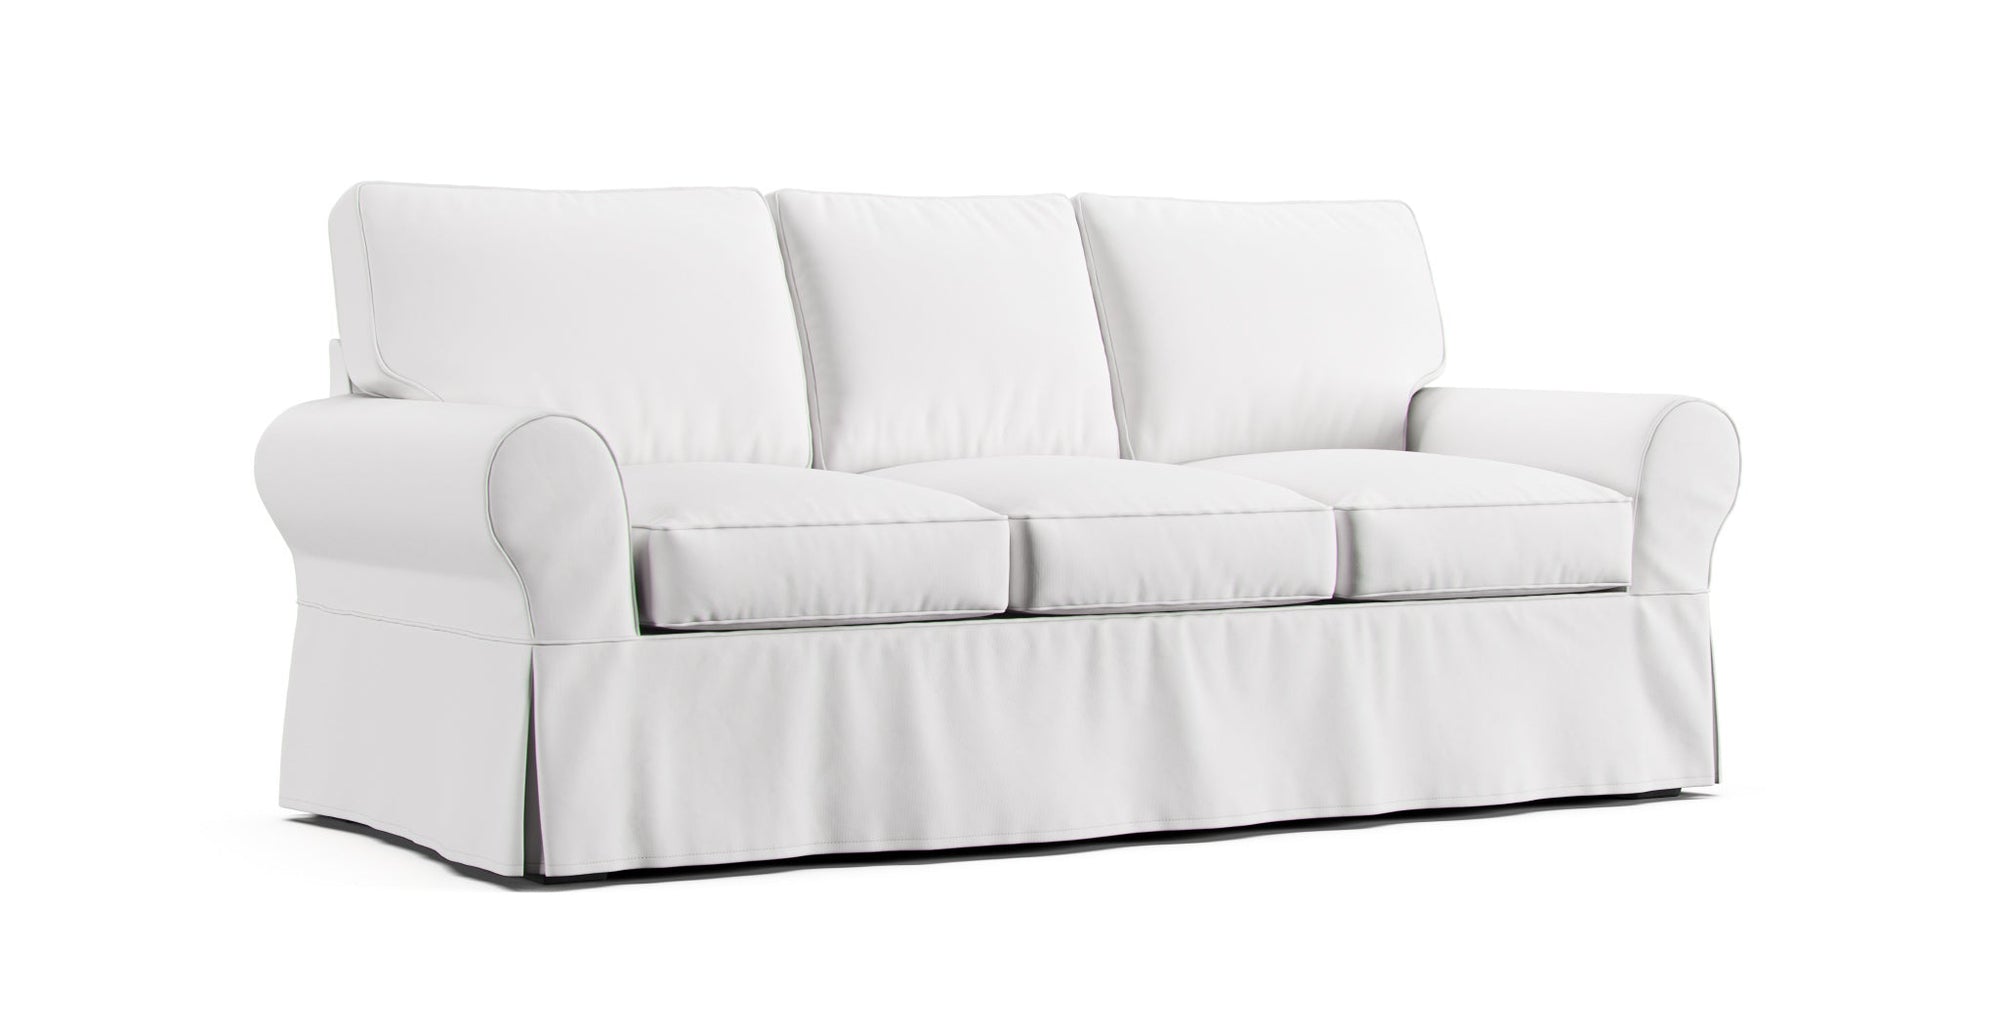 Pottery Barn Basic sofa featuring machine washable white Cotton Canvas slipcover